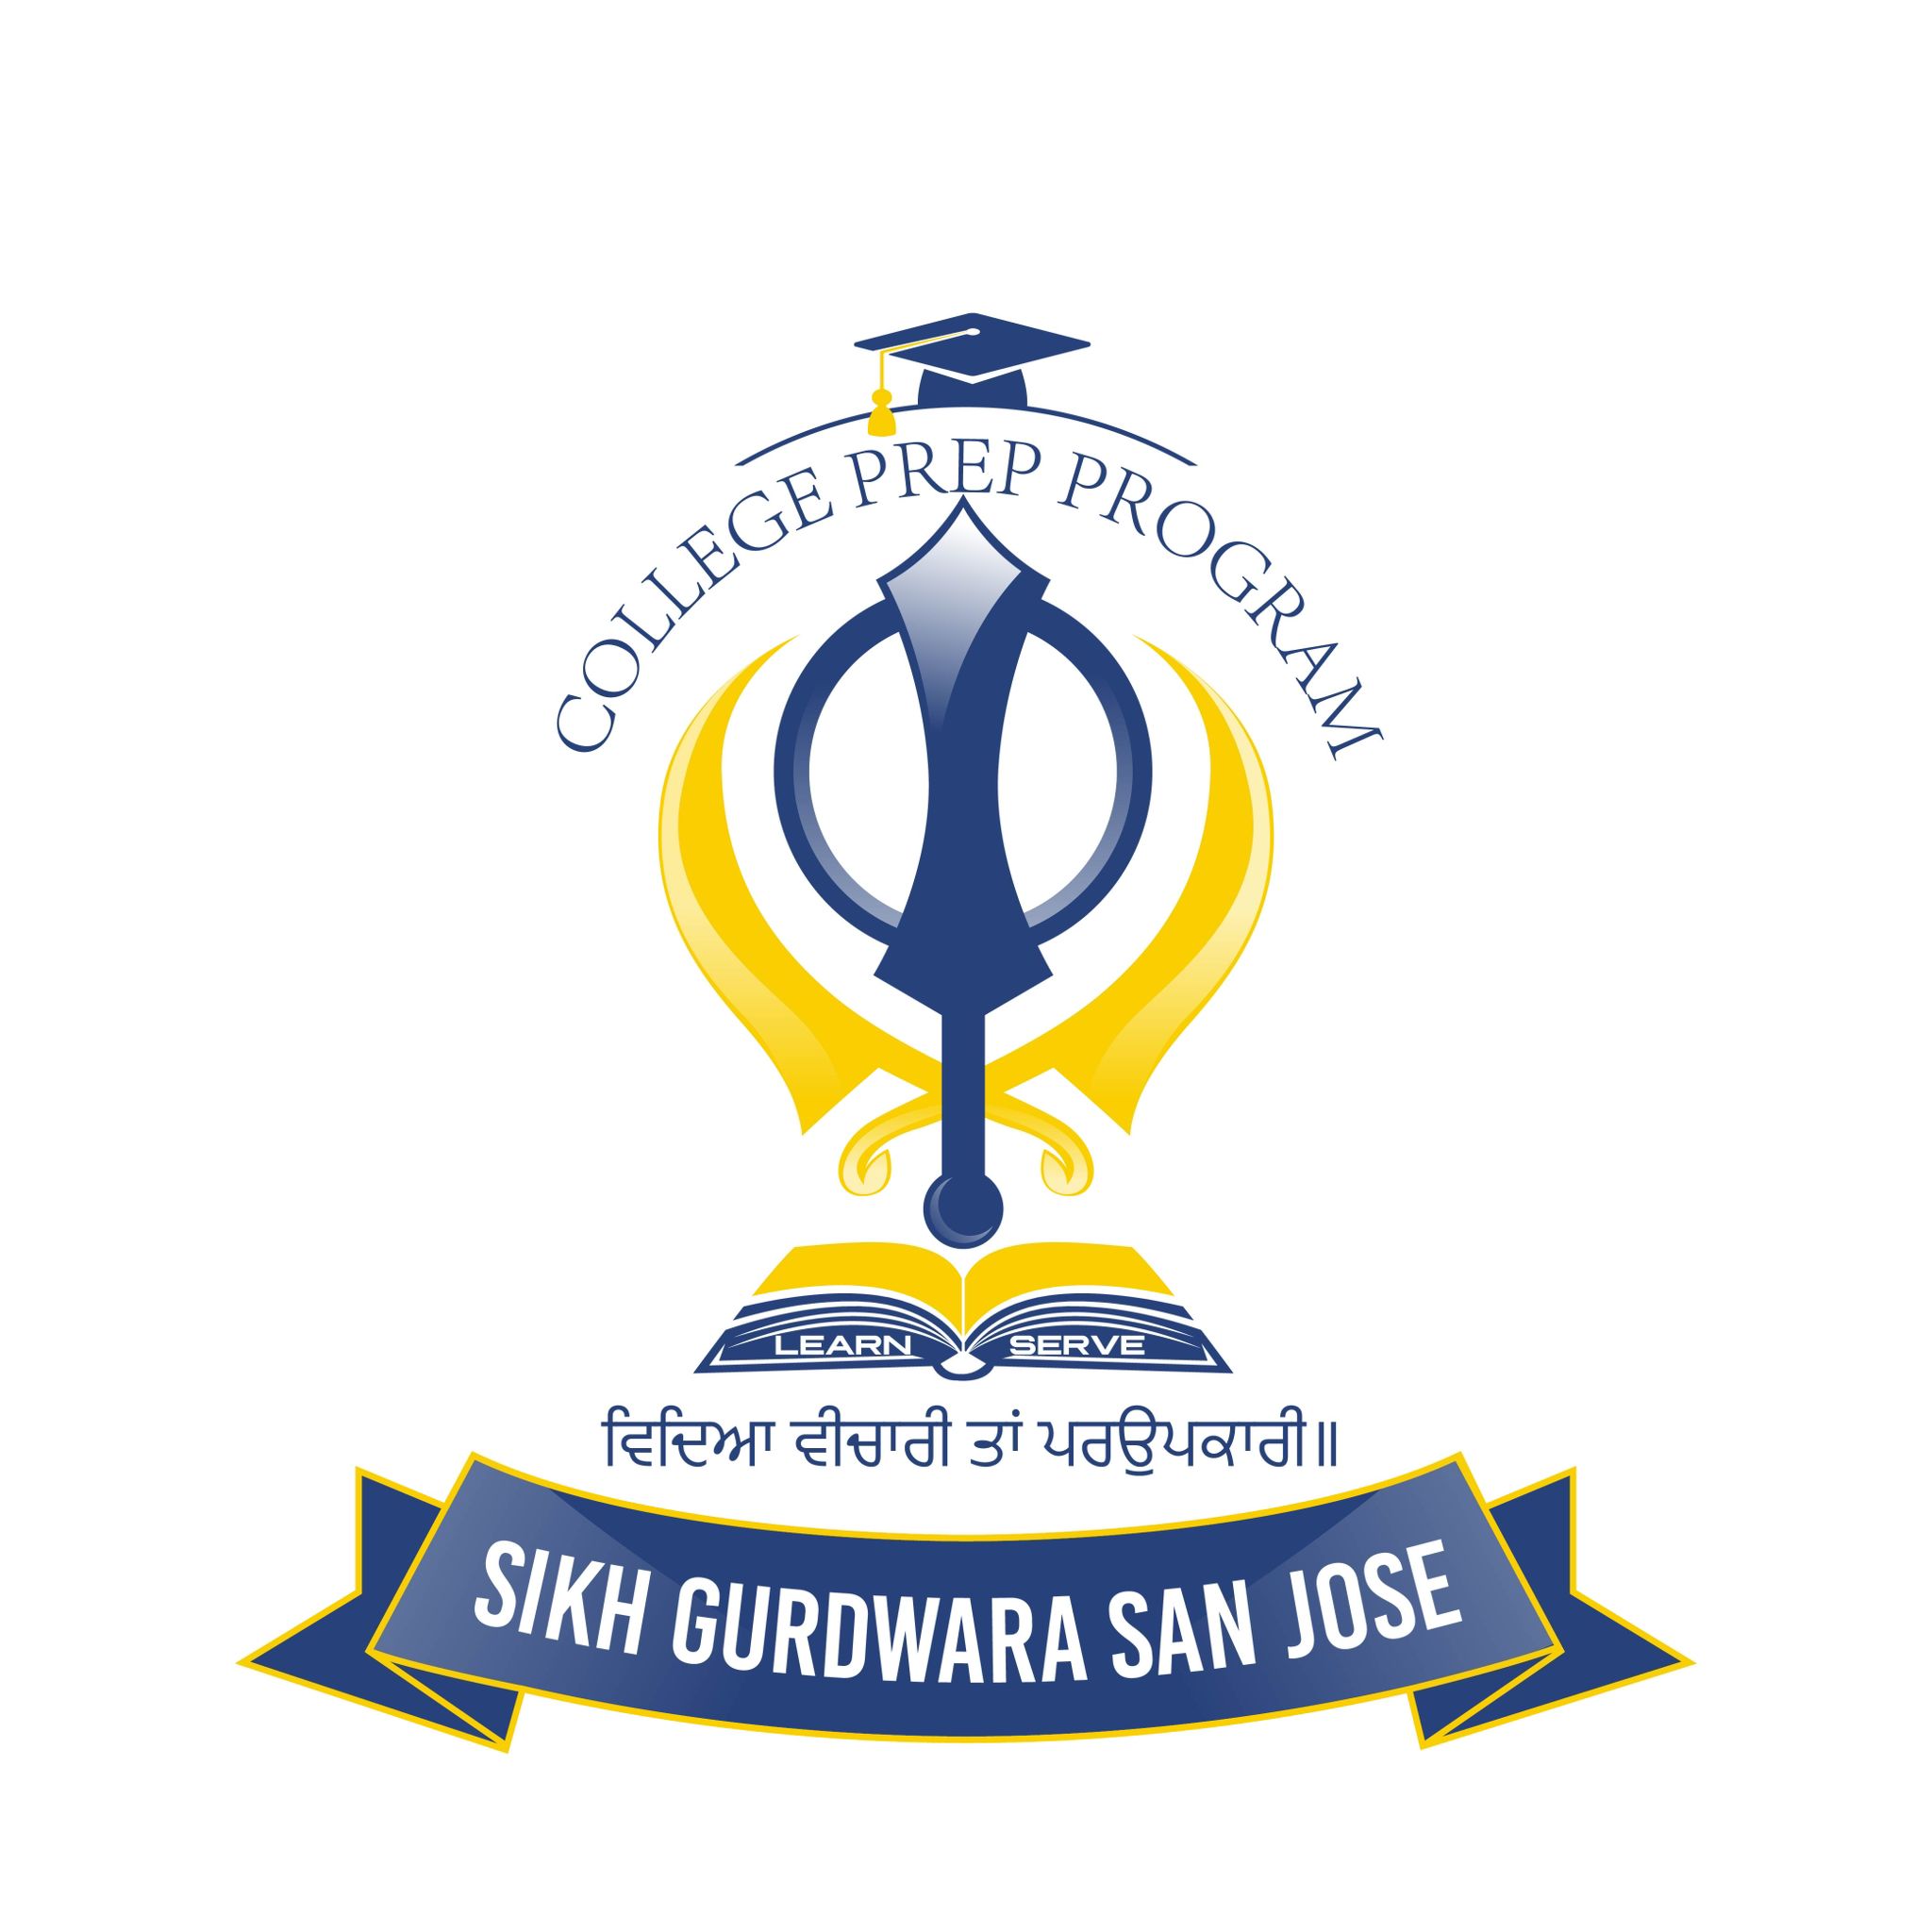 Sikh Gurdwara SJ, College Prep Program Logo